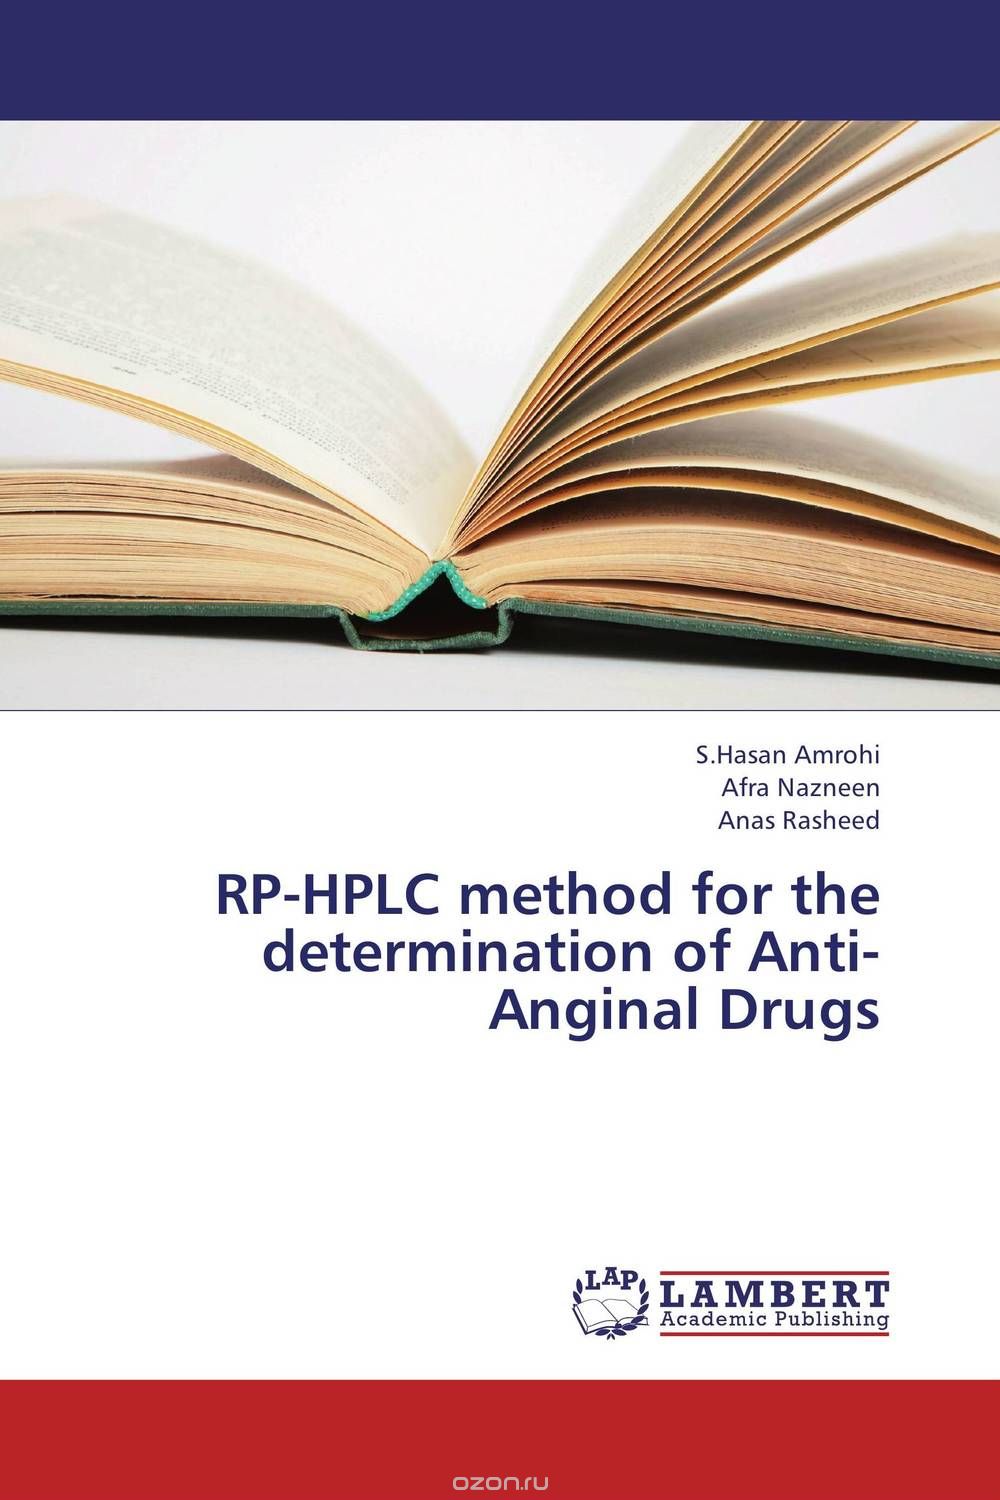 Скачать книгу "RP-HPLC method for the determination of Anti-Anginal Drugs"